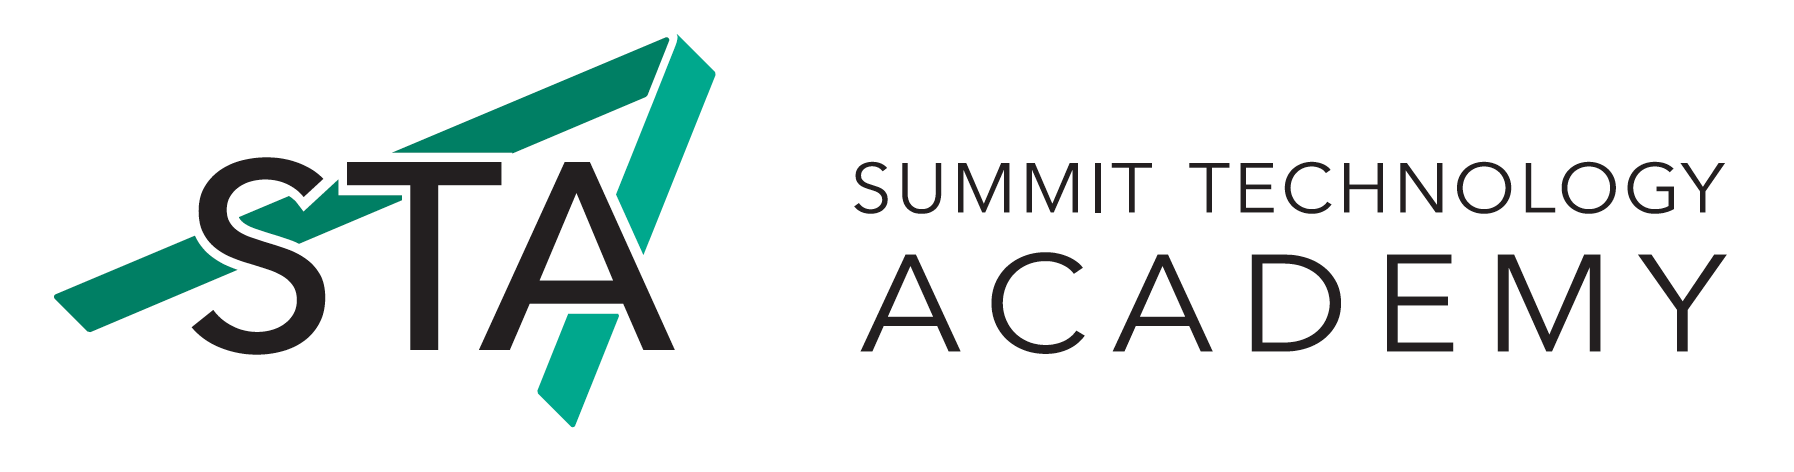 Summit Technology Academy